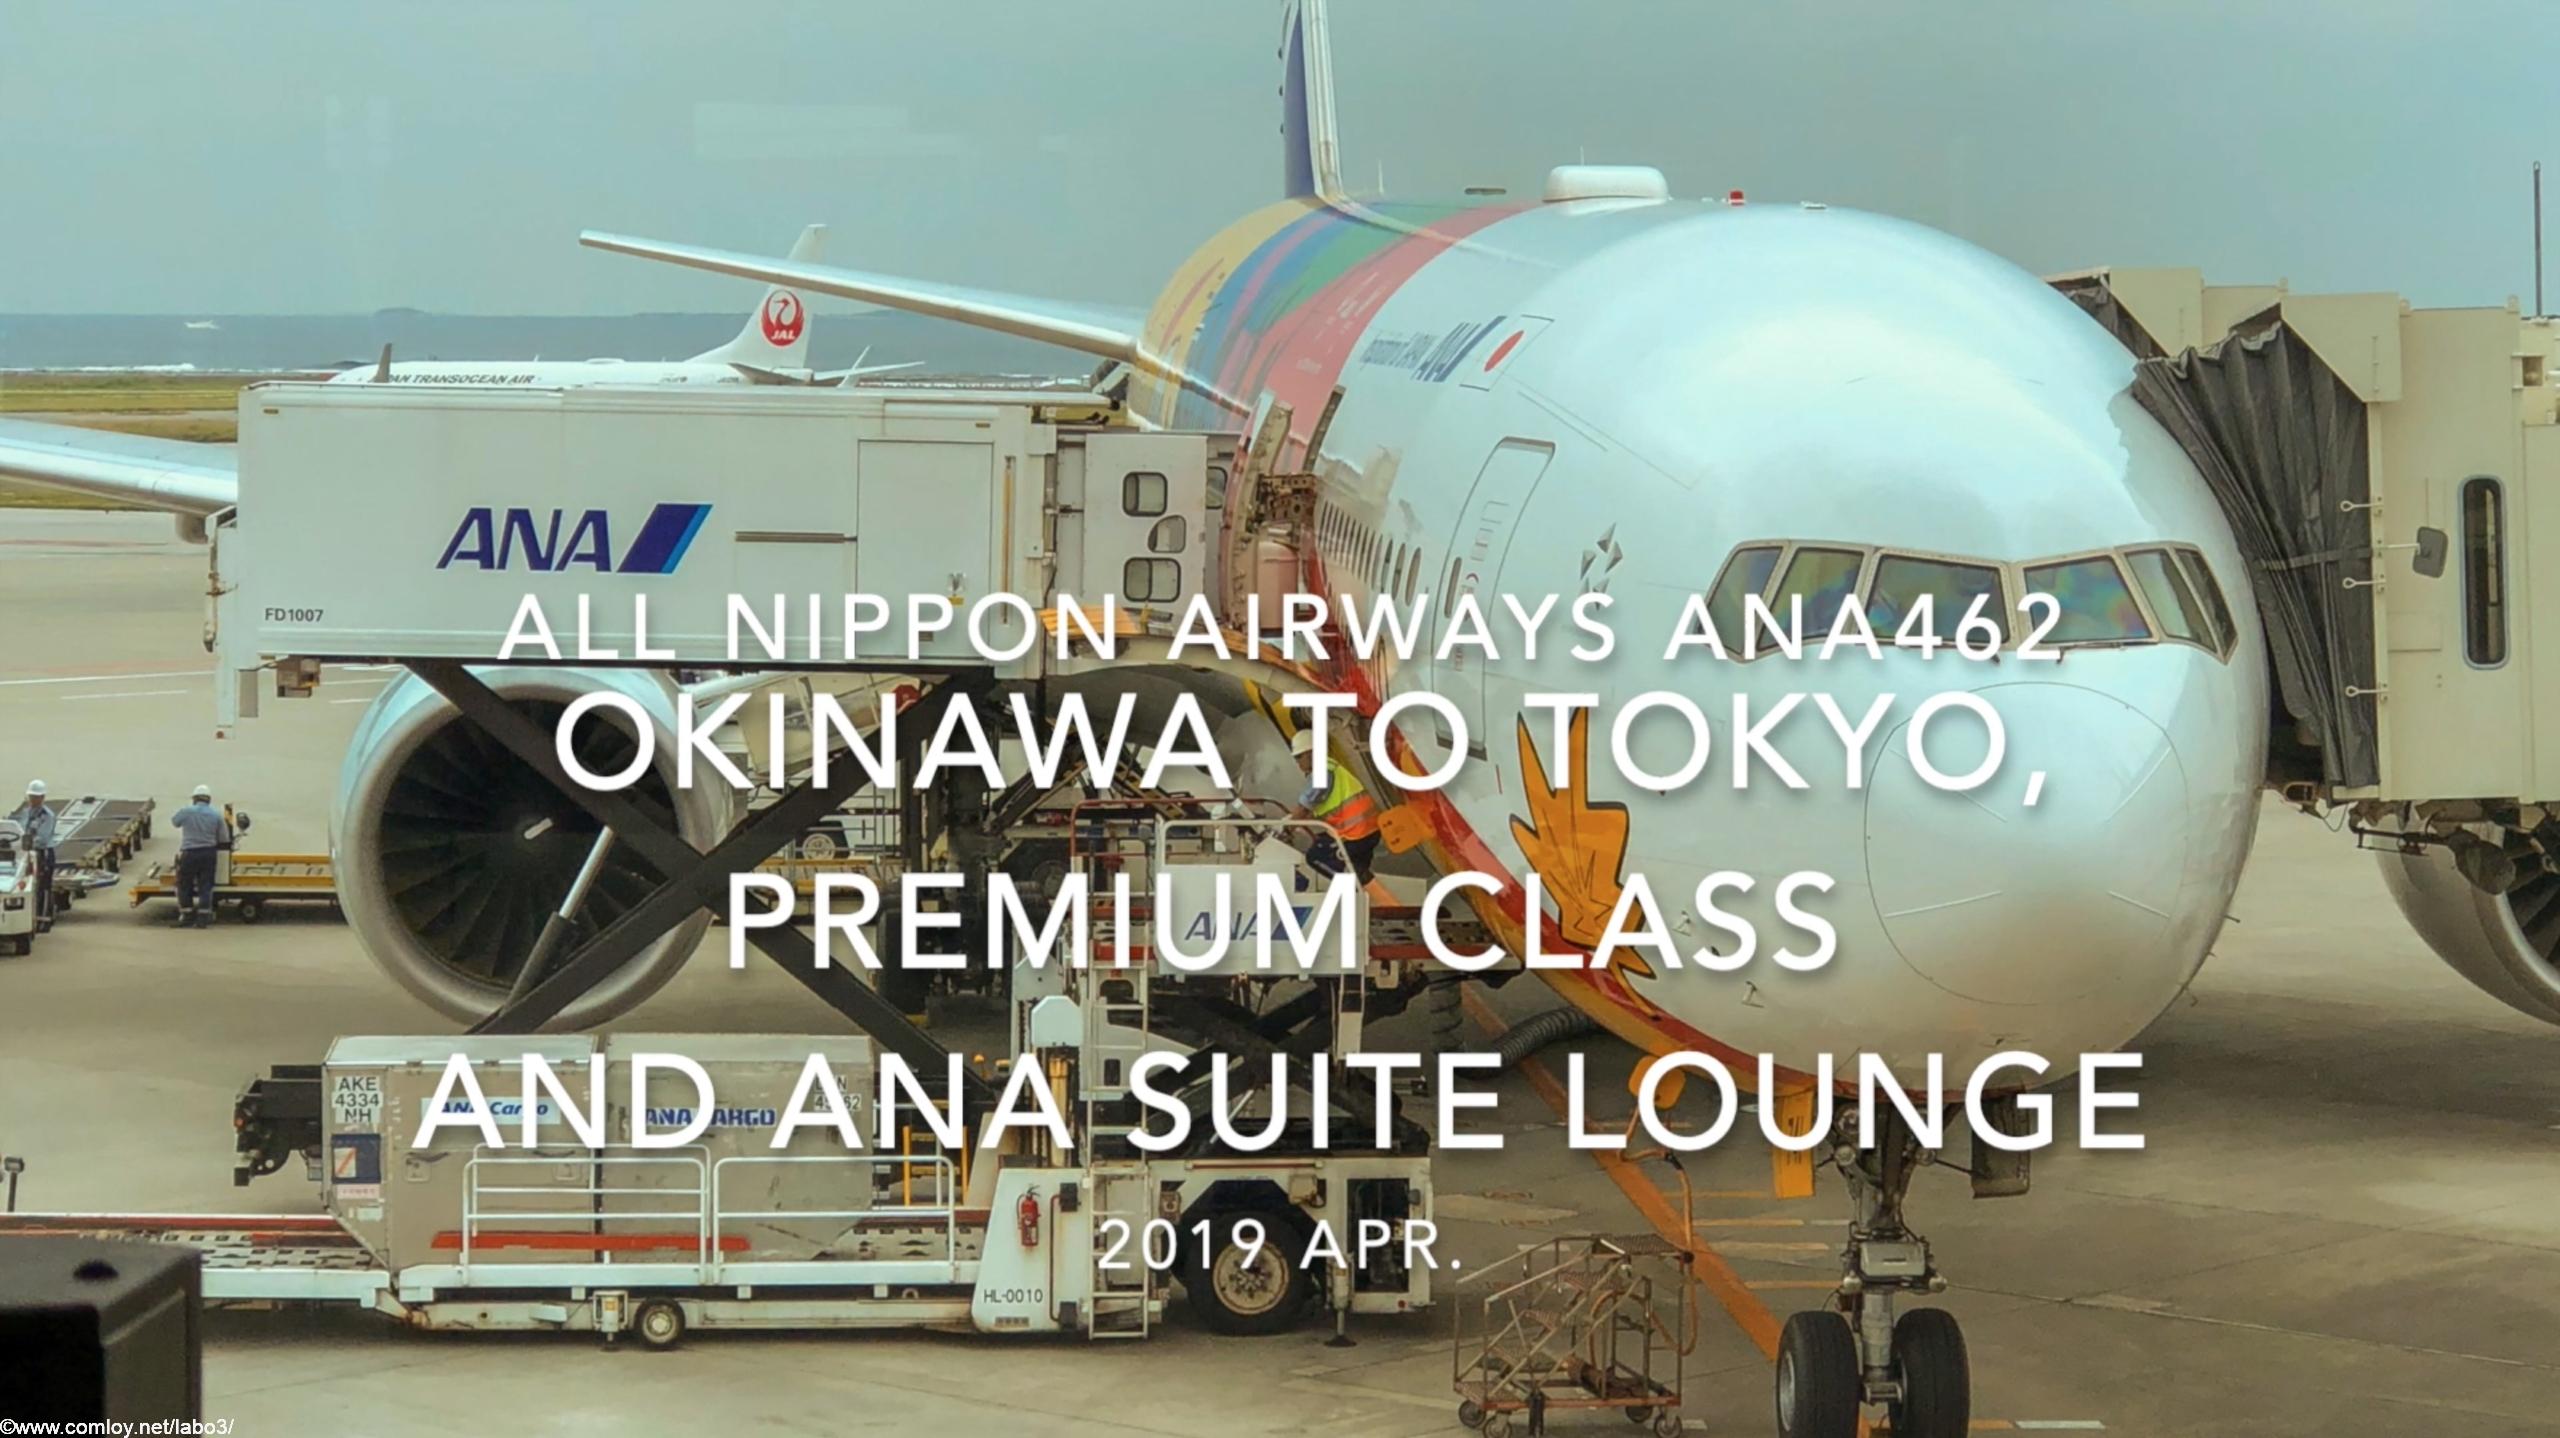 【Flight Report】2019 Apr All Nippon Airways ANA462 OKINAWA NAHA TO TOKYO HANEDA PREMIUM CLASS AND ANA SUITE LOUNGE 全日空 那覇 - 羽田 搭乗記